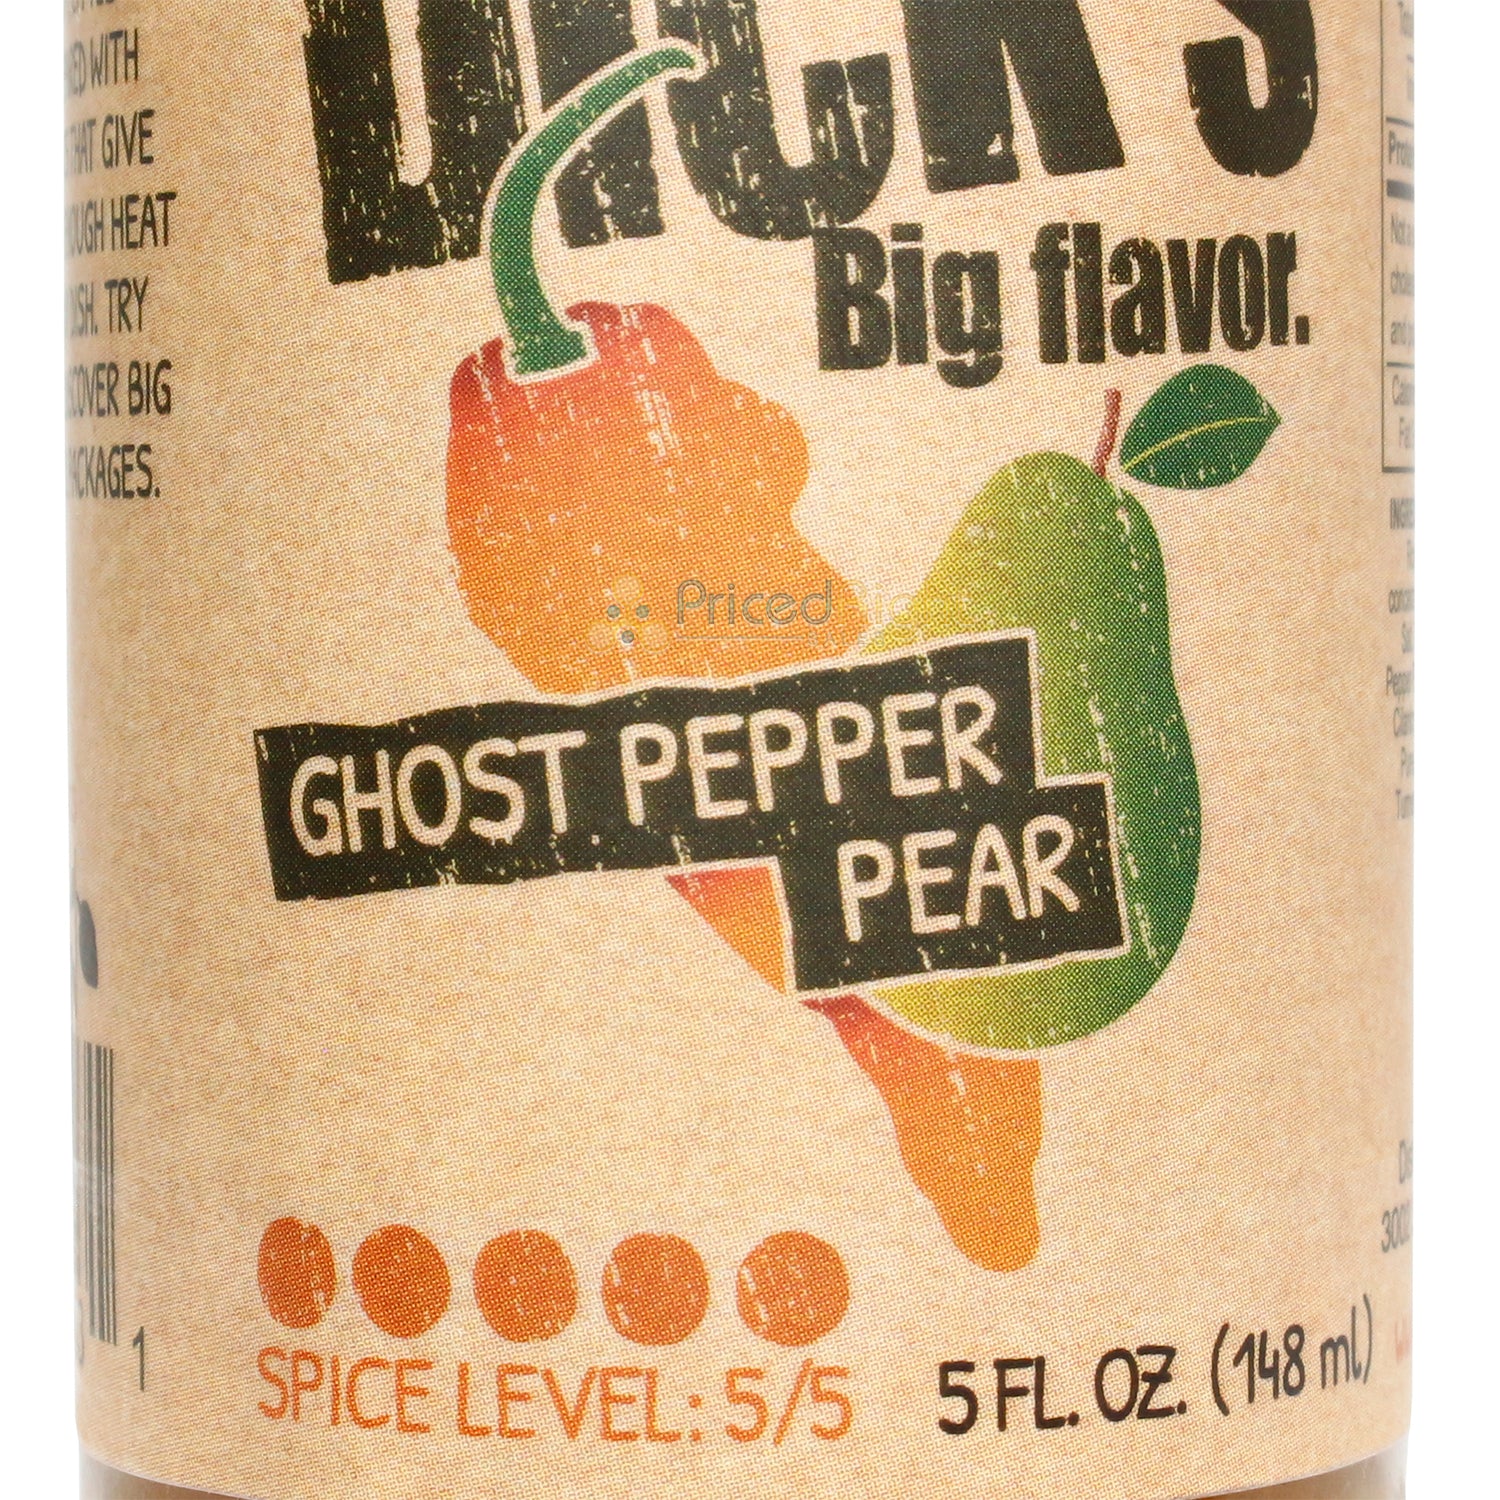 Little Dick's Ghost Pepper Pear Hot Sauce Gluten Free Spicy Small Batch 5 Fl Oz